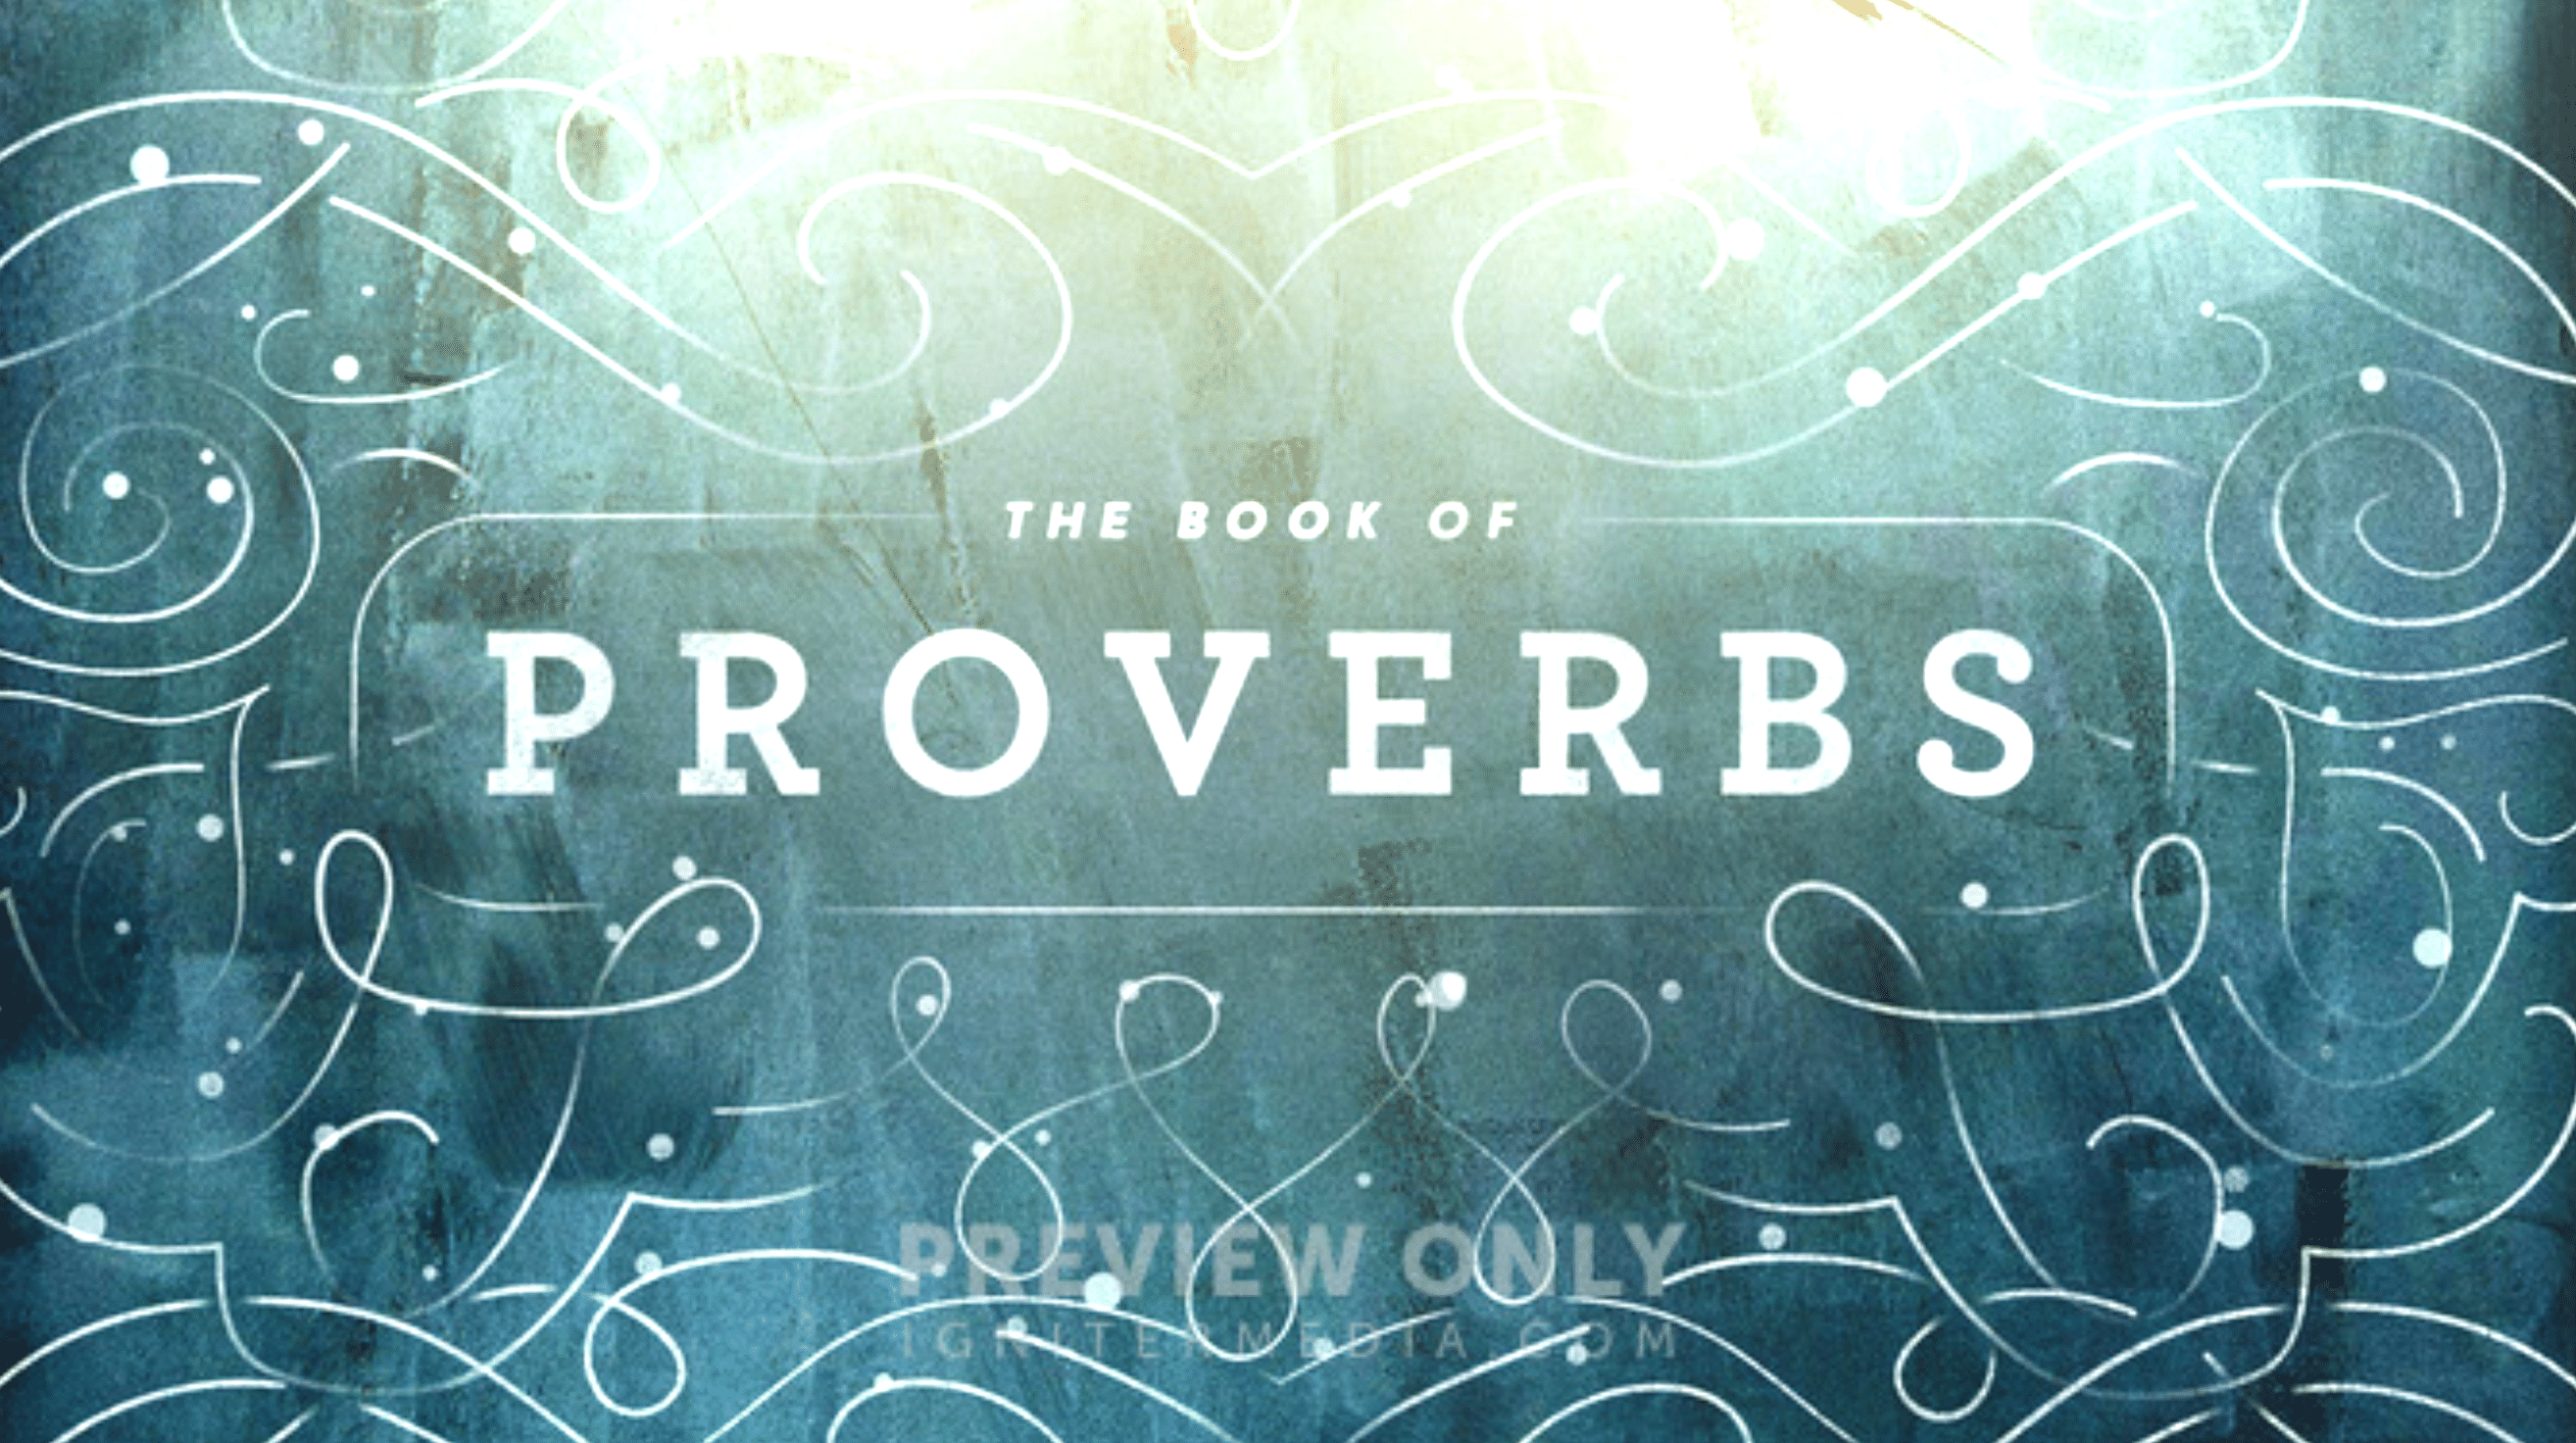 Proverbs 18 & 27, Wisdom & Friendship (Keslinger)